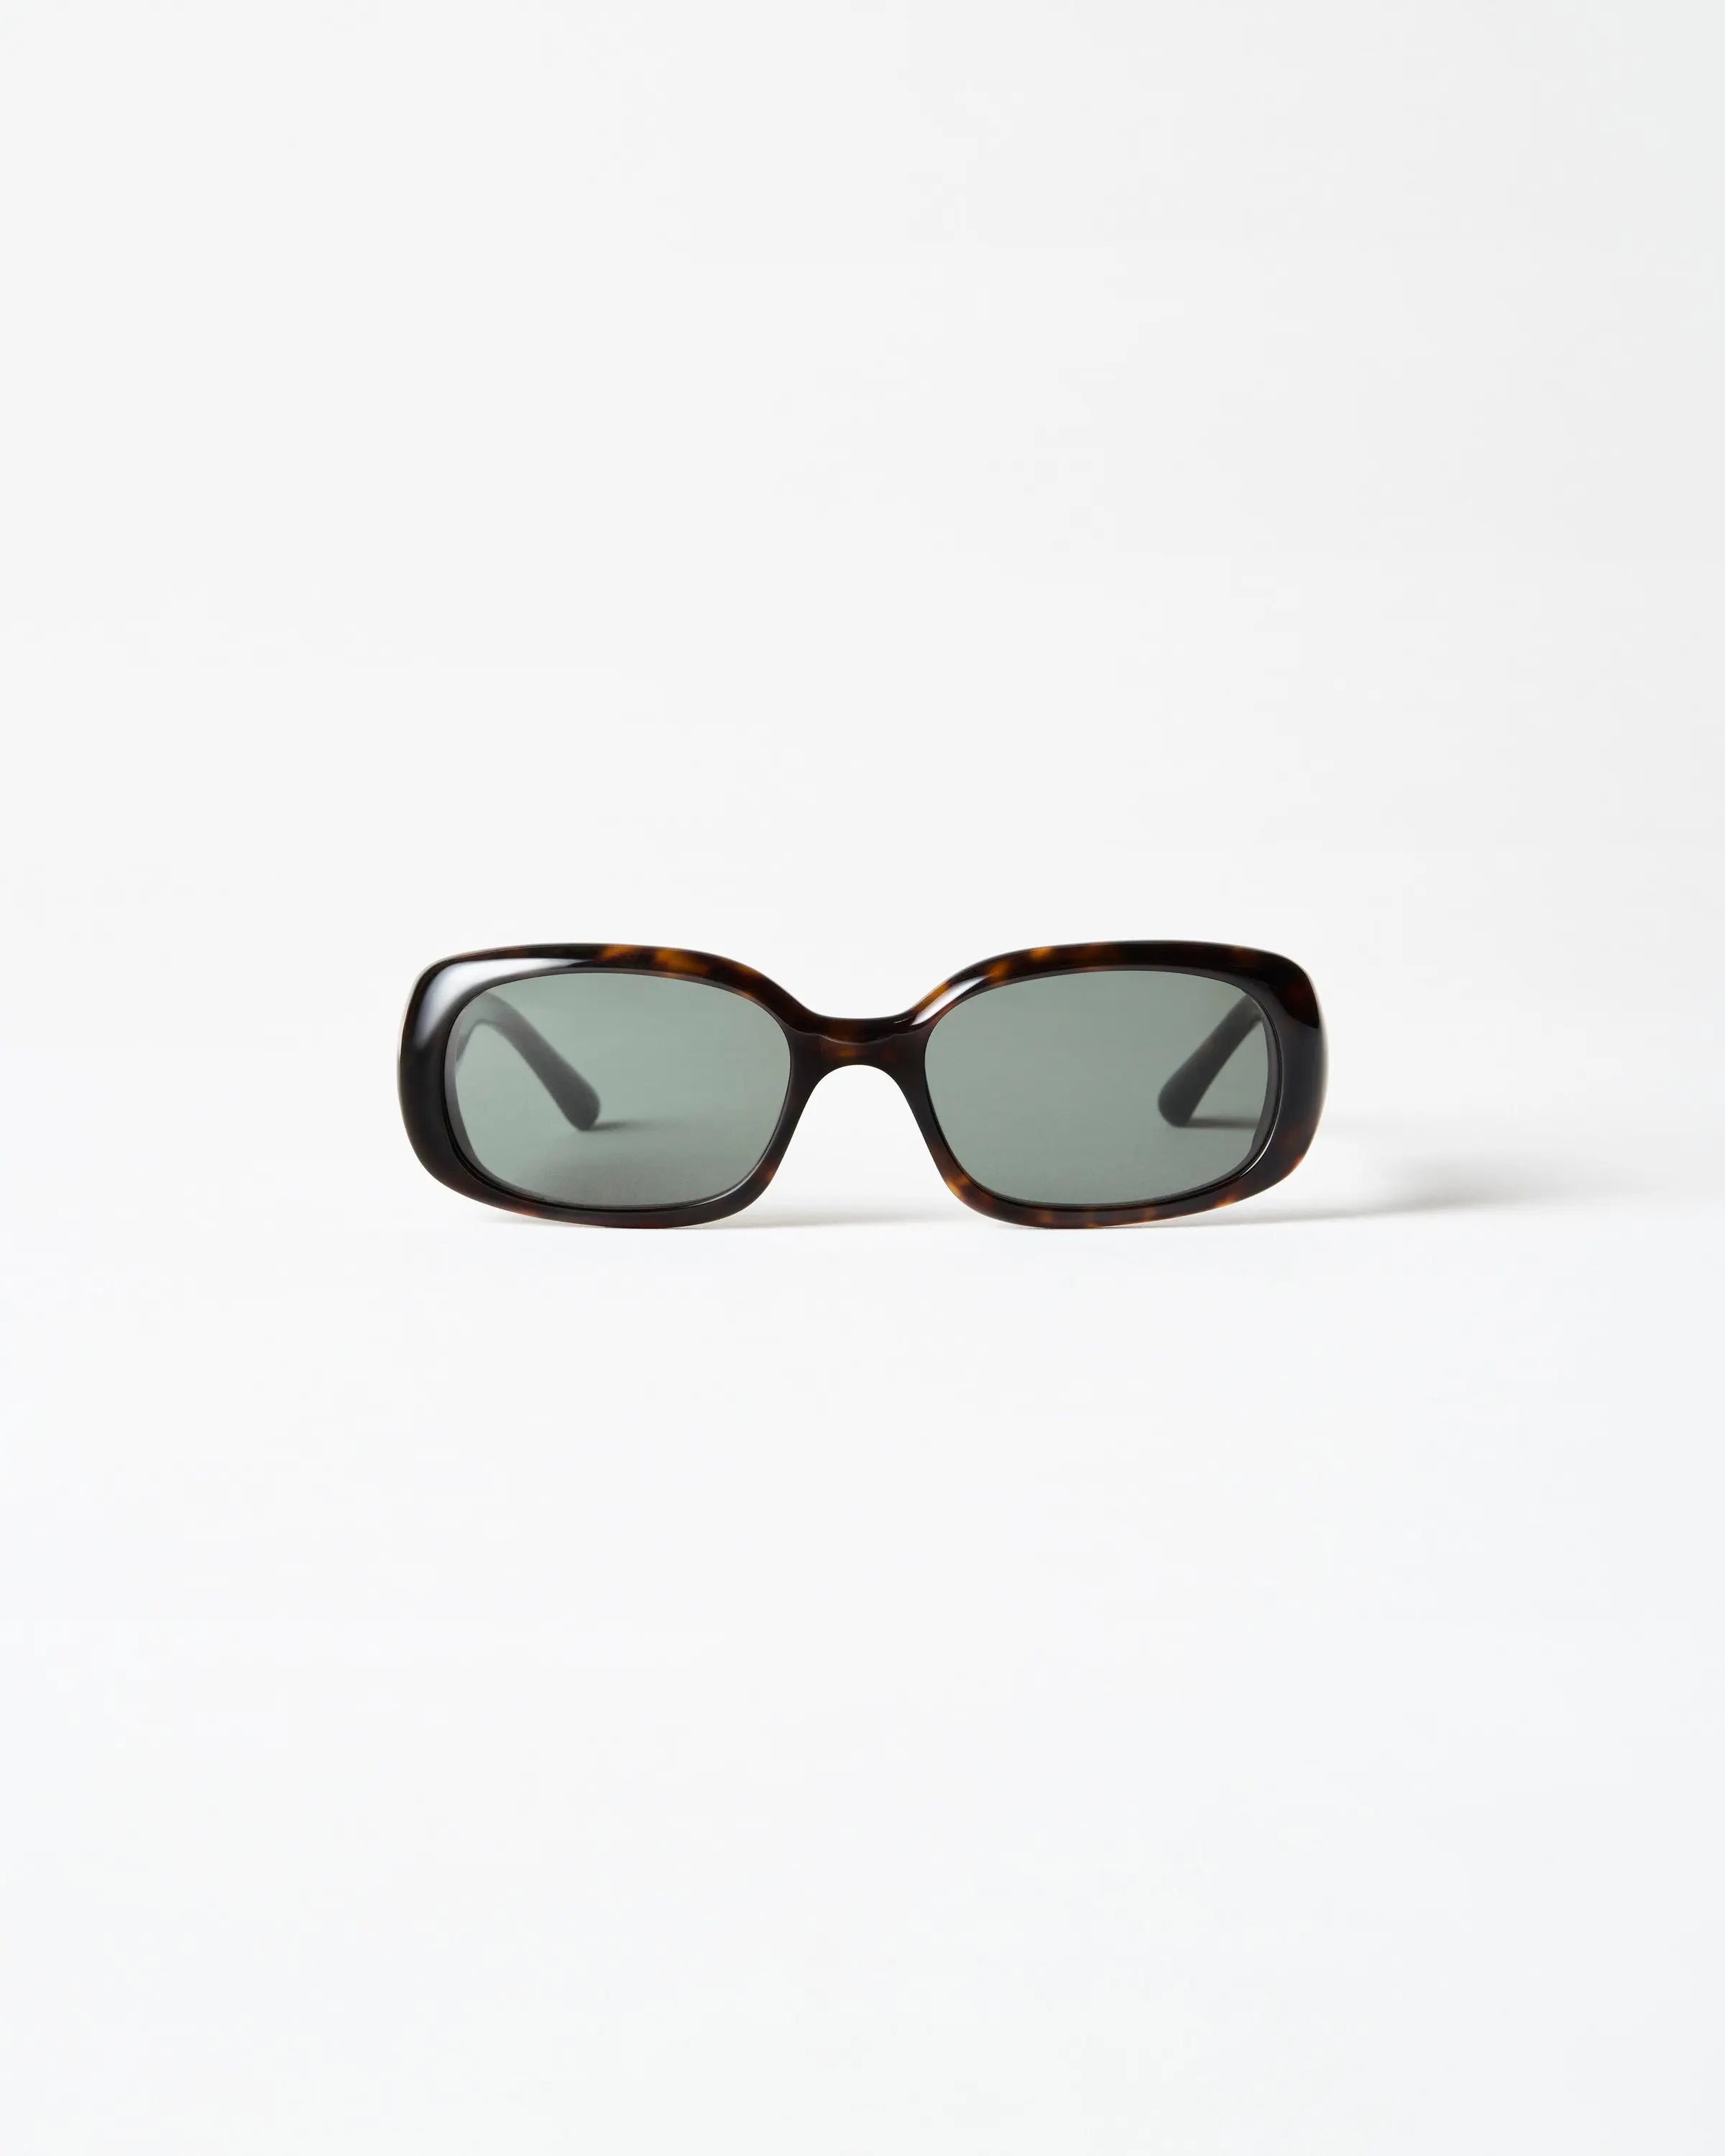 CHIMI Tortoise LAX Sunglasses